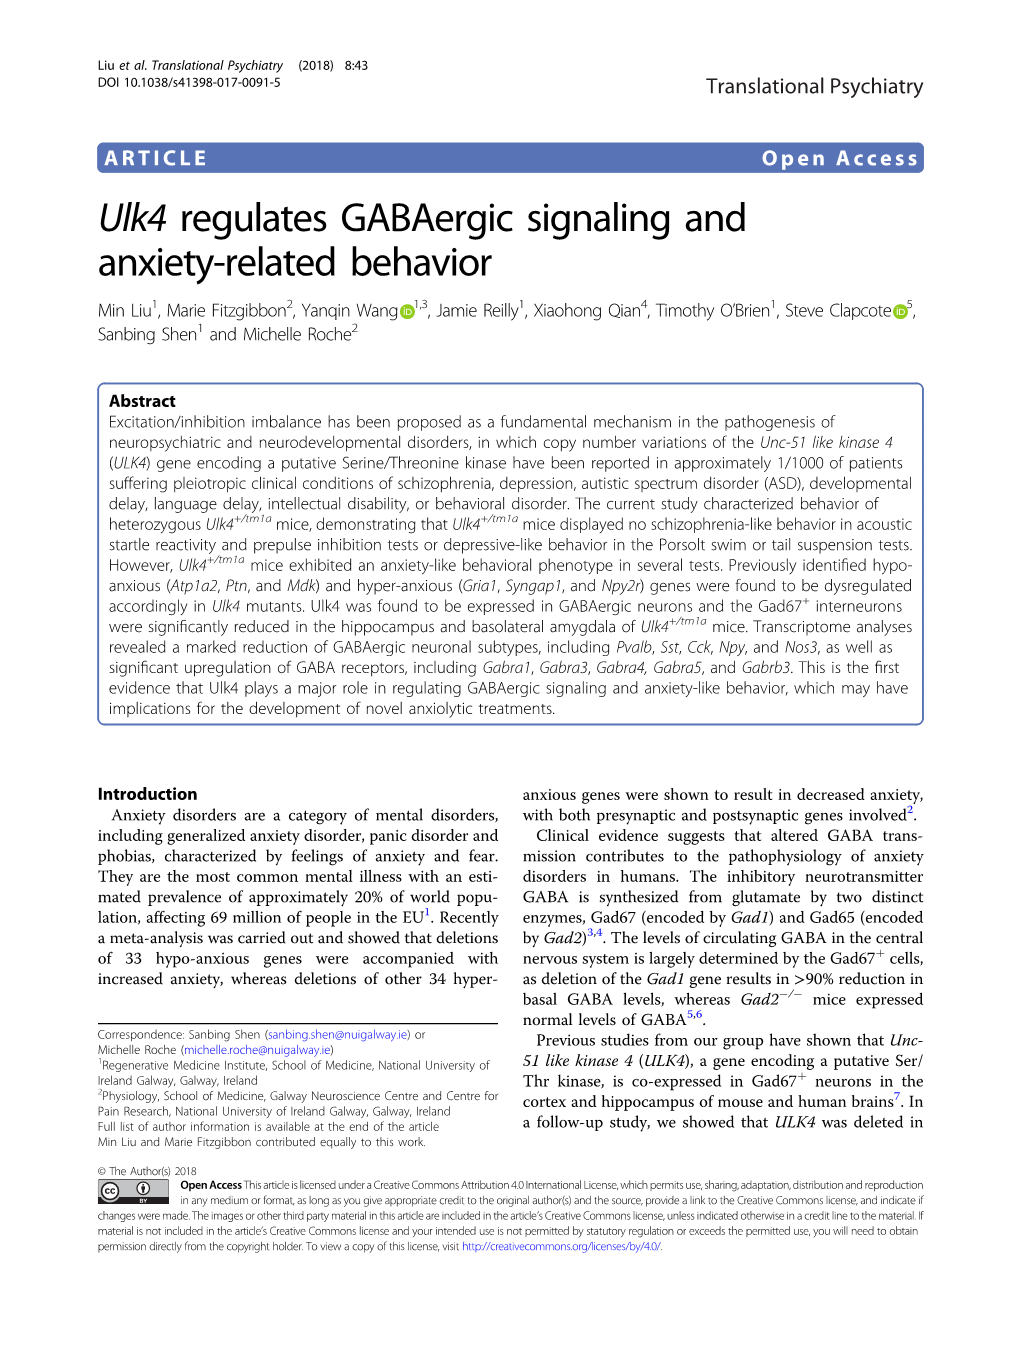 Ulk4 Regulates Gabaergic Signaling and Anxiety-Related Behavior